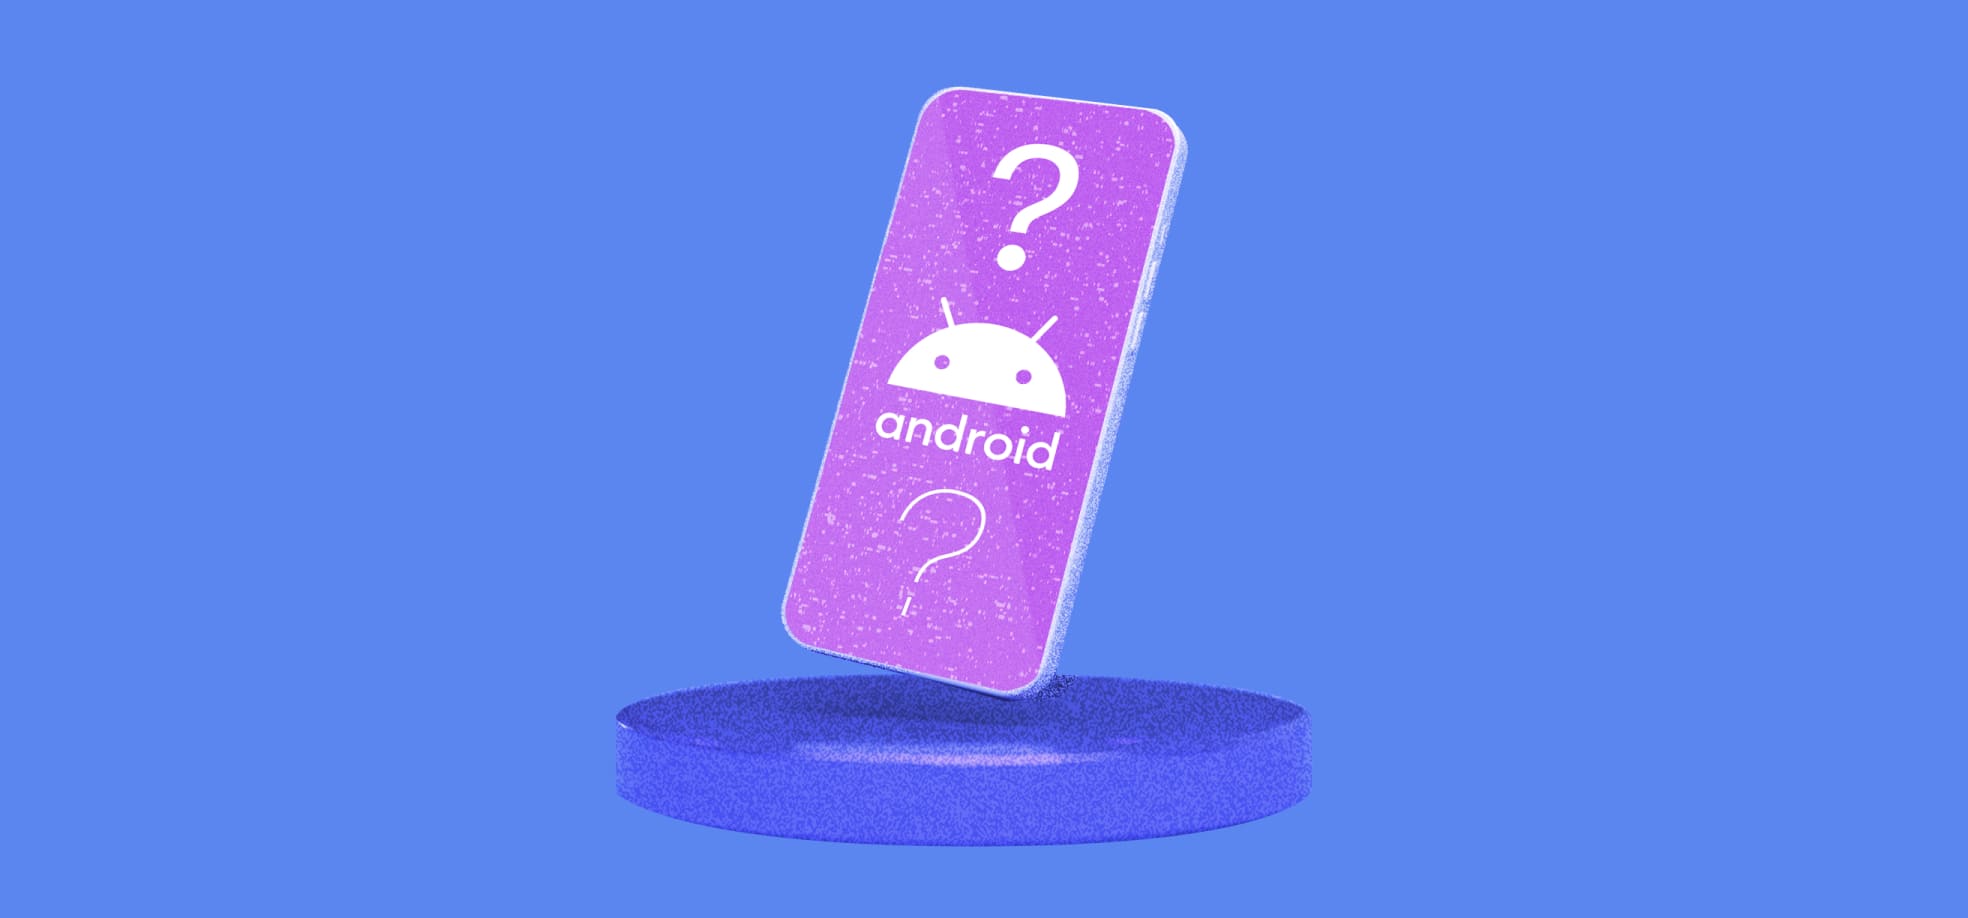 Android phone illustration